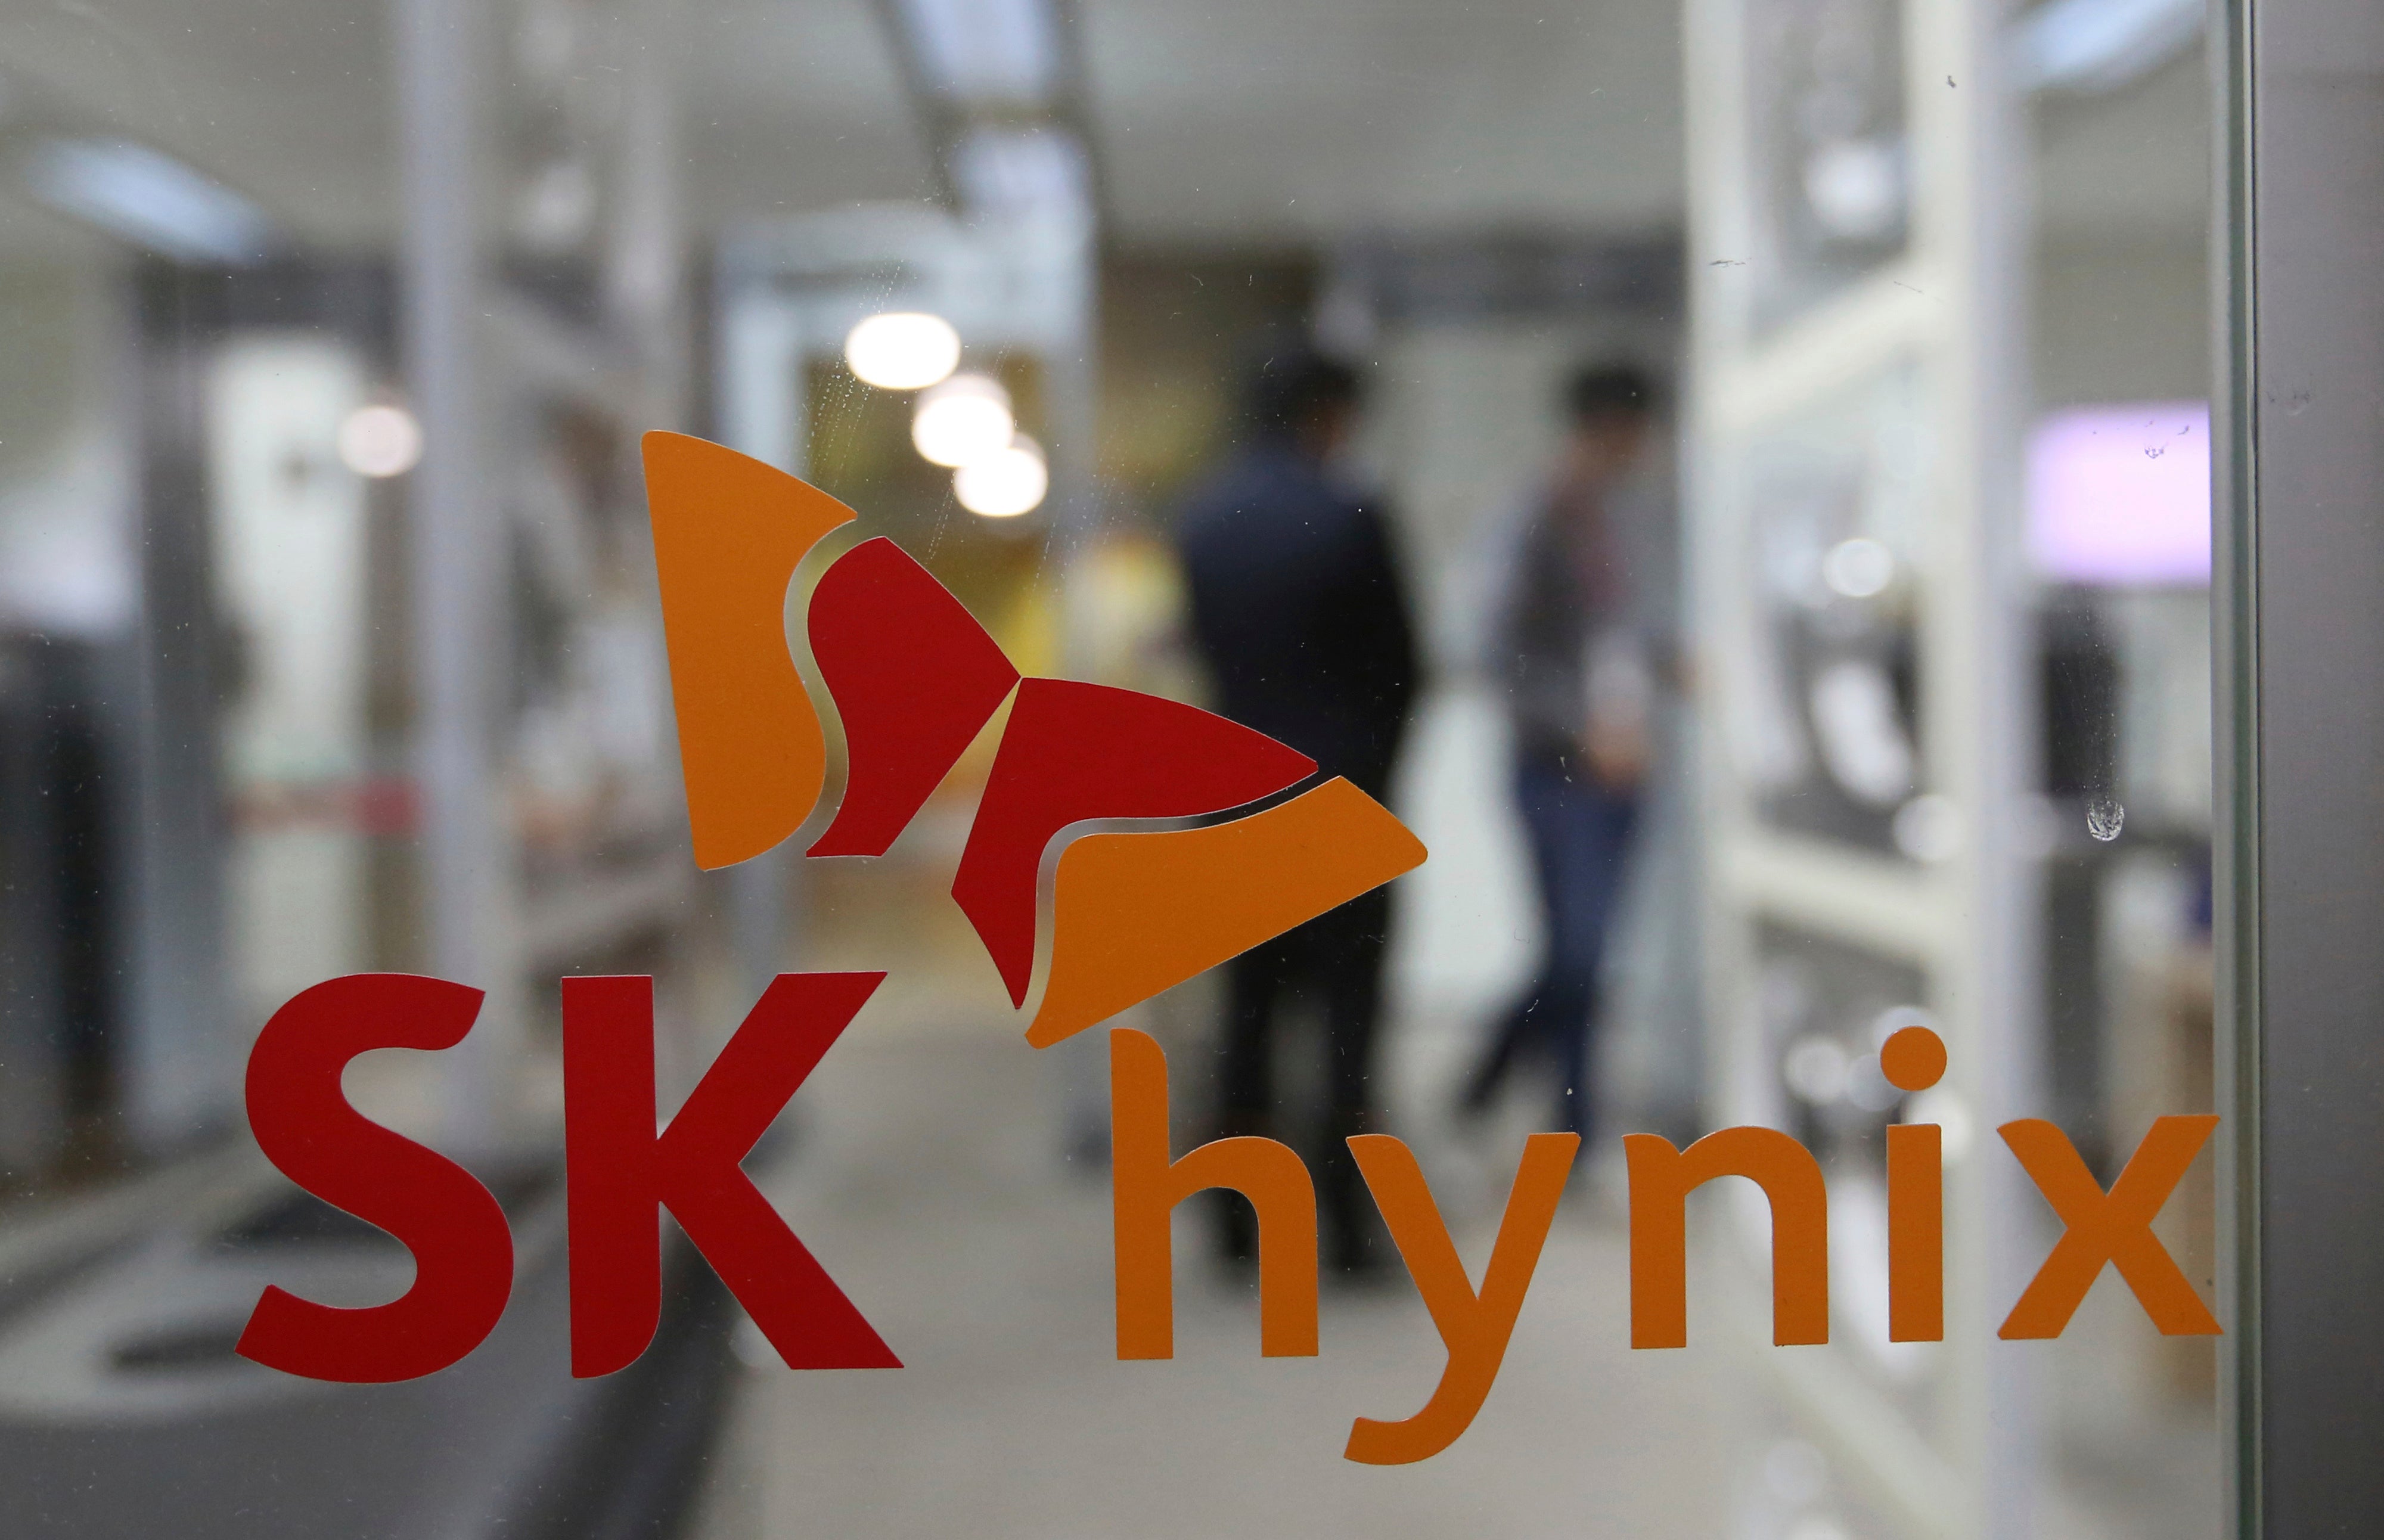 South Korea Intel SK Hynix